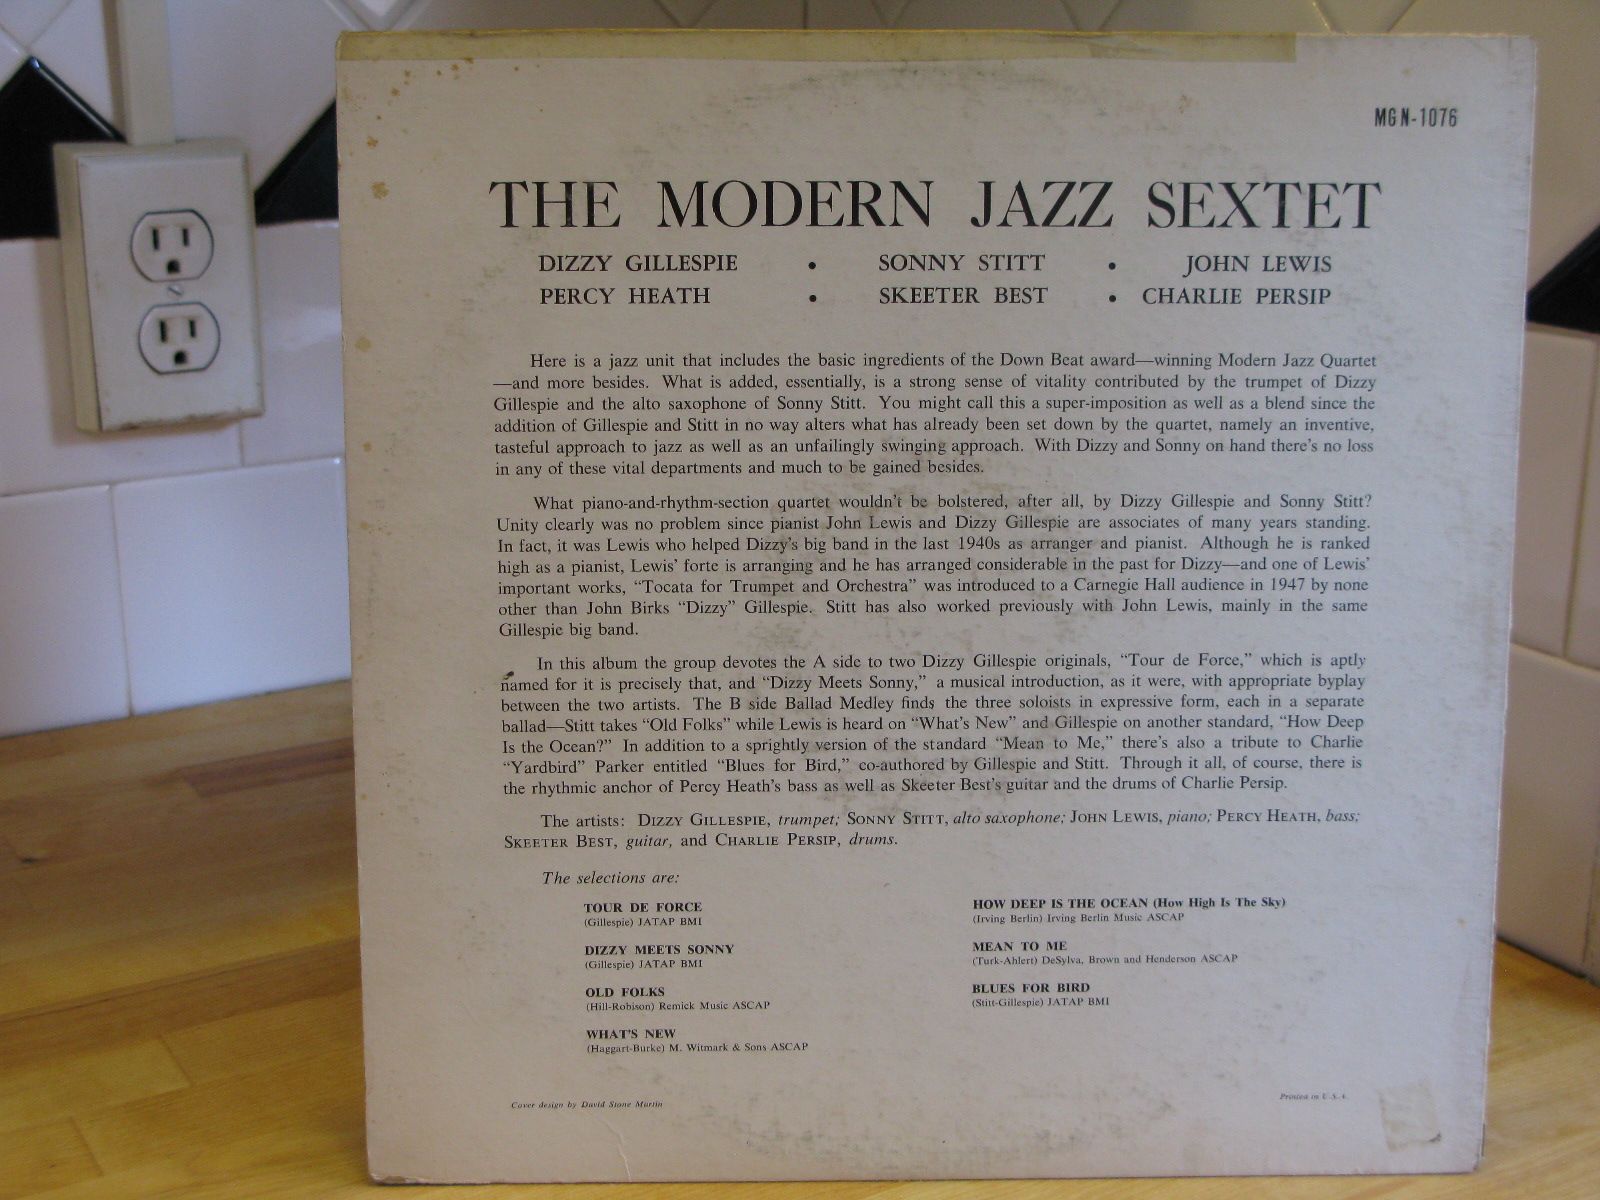 Modern Jazz Sextet Norgran MG N 1076 VG David Stone Martin Cover DSM 